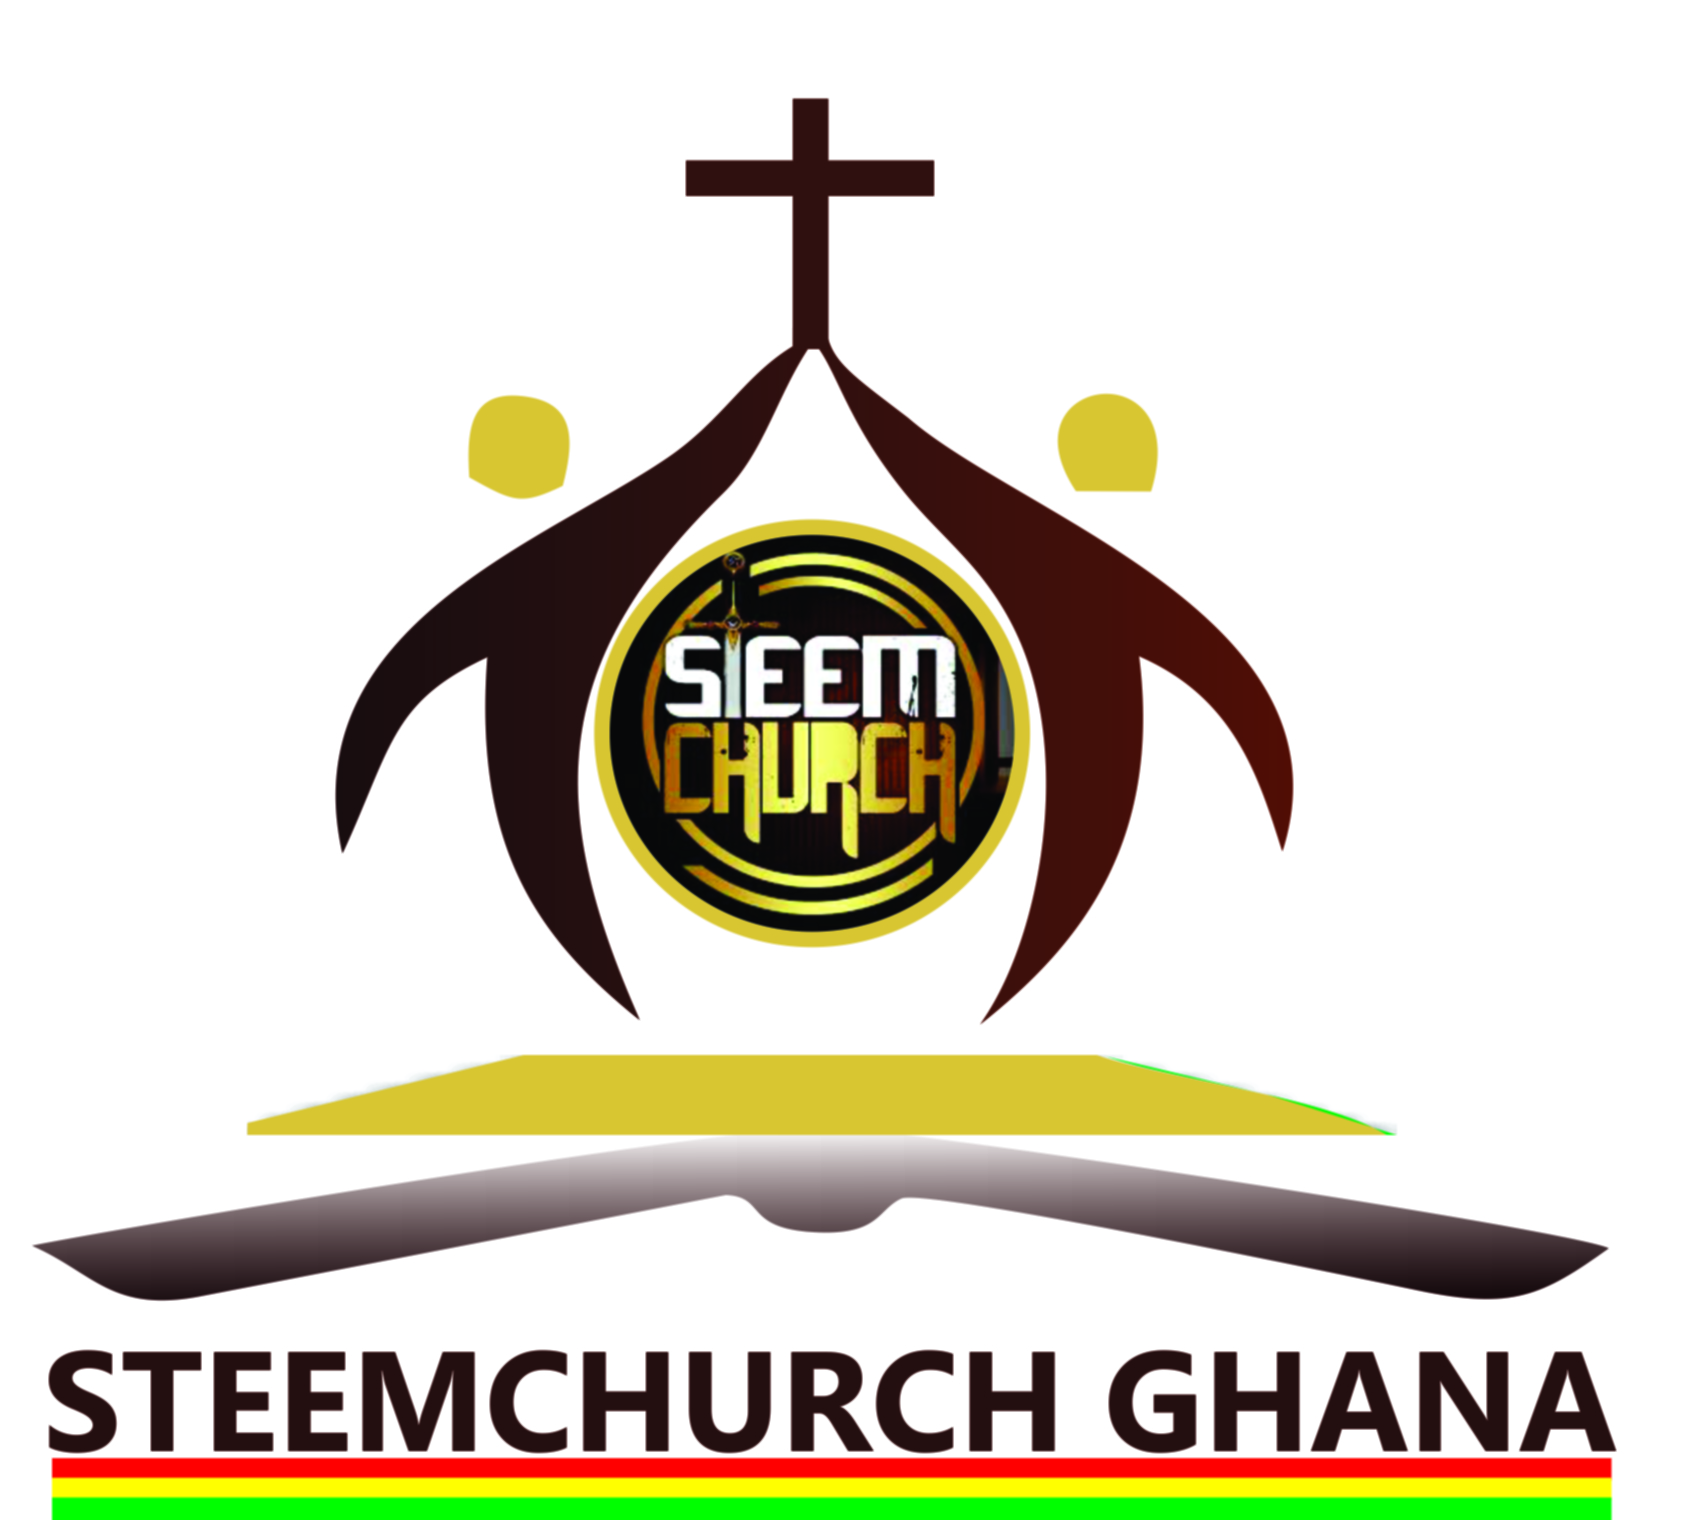 STEEMCHURCH logo.jpg